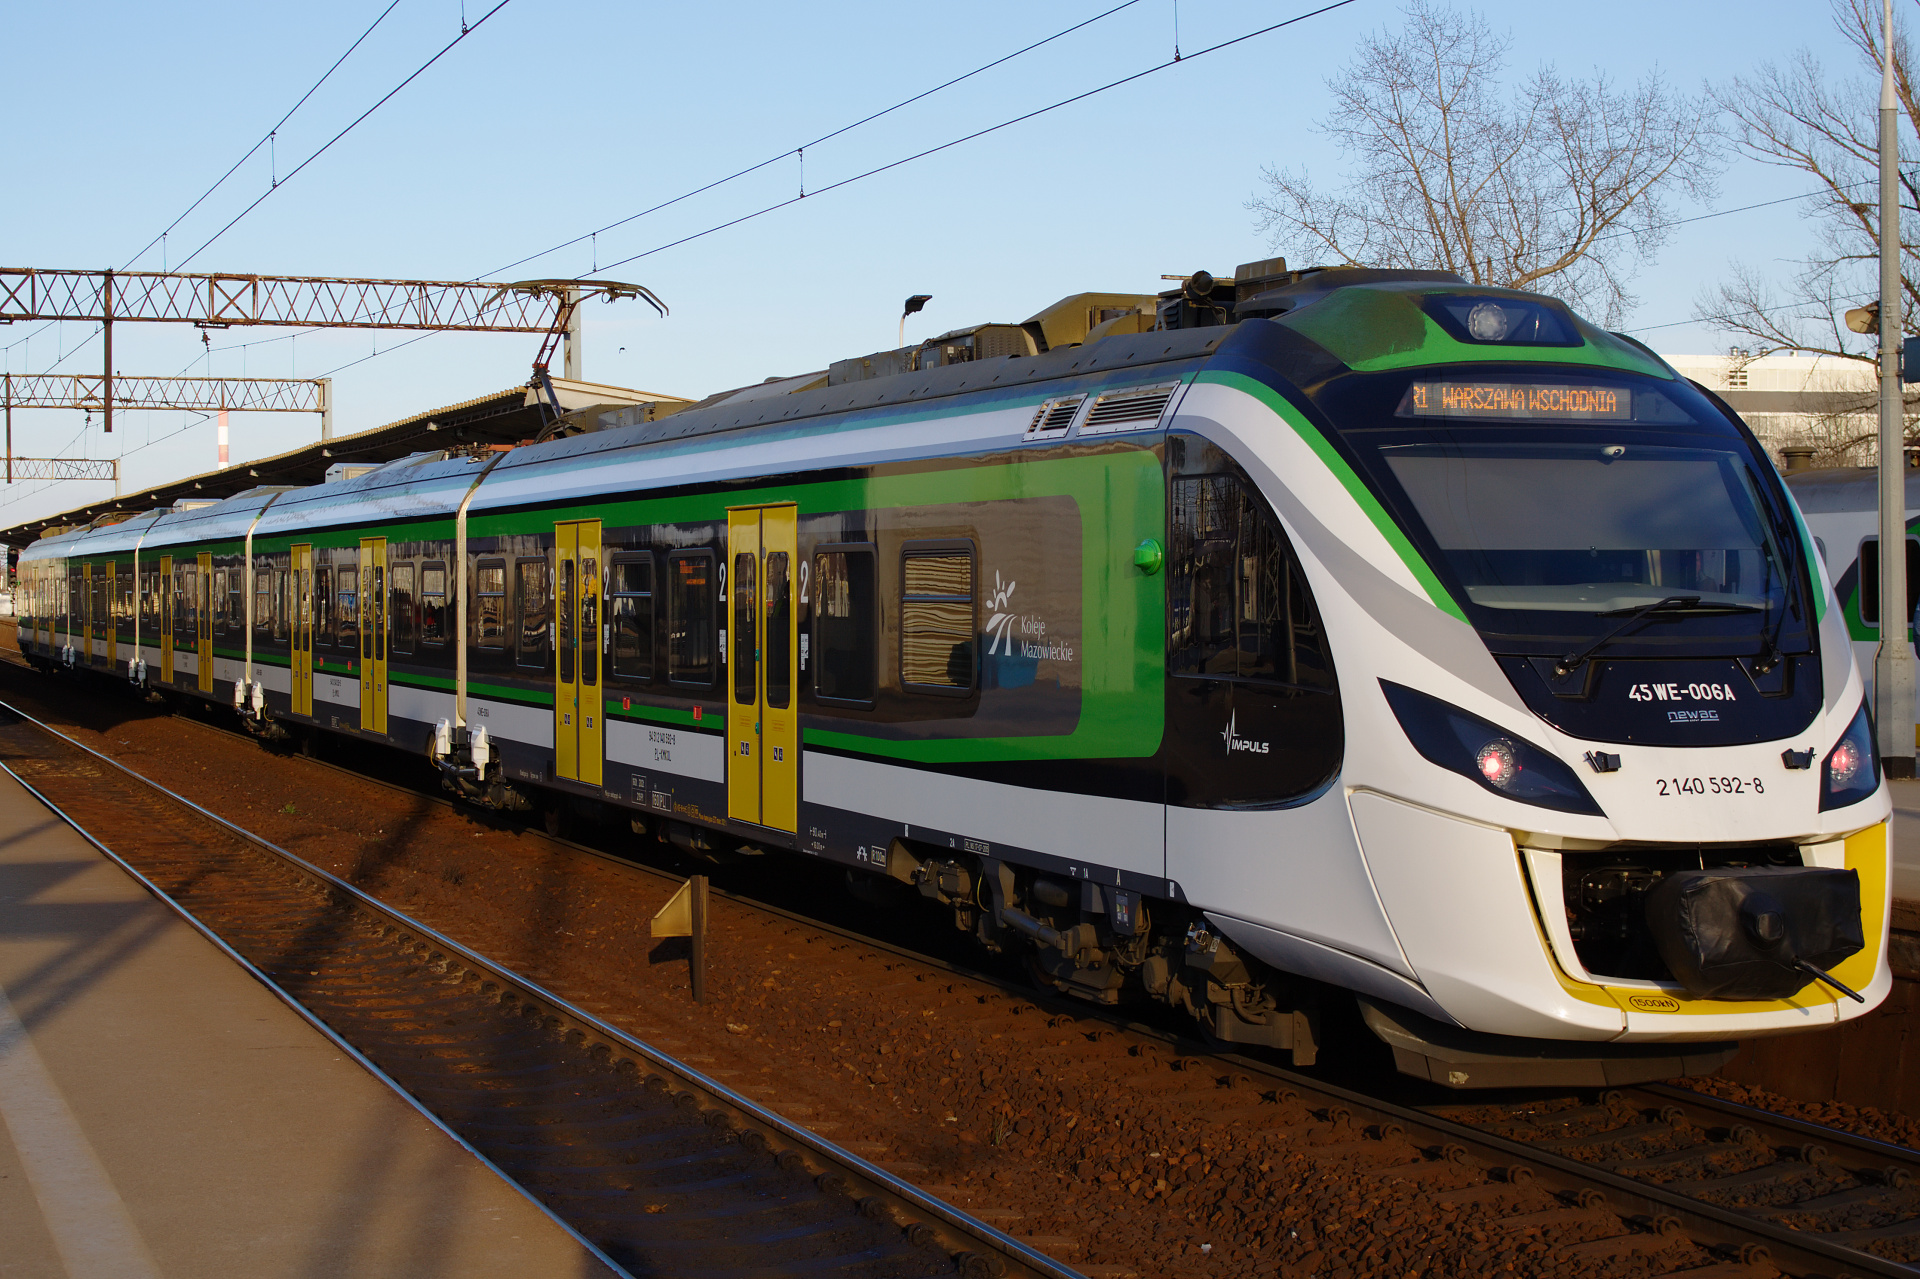 45WE-006 (Vehicles » Trains and Locomotives » Newag Impuls)